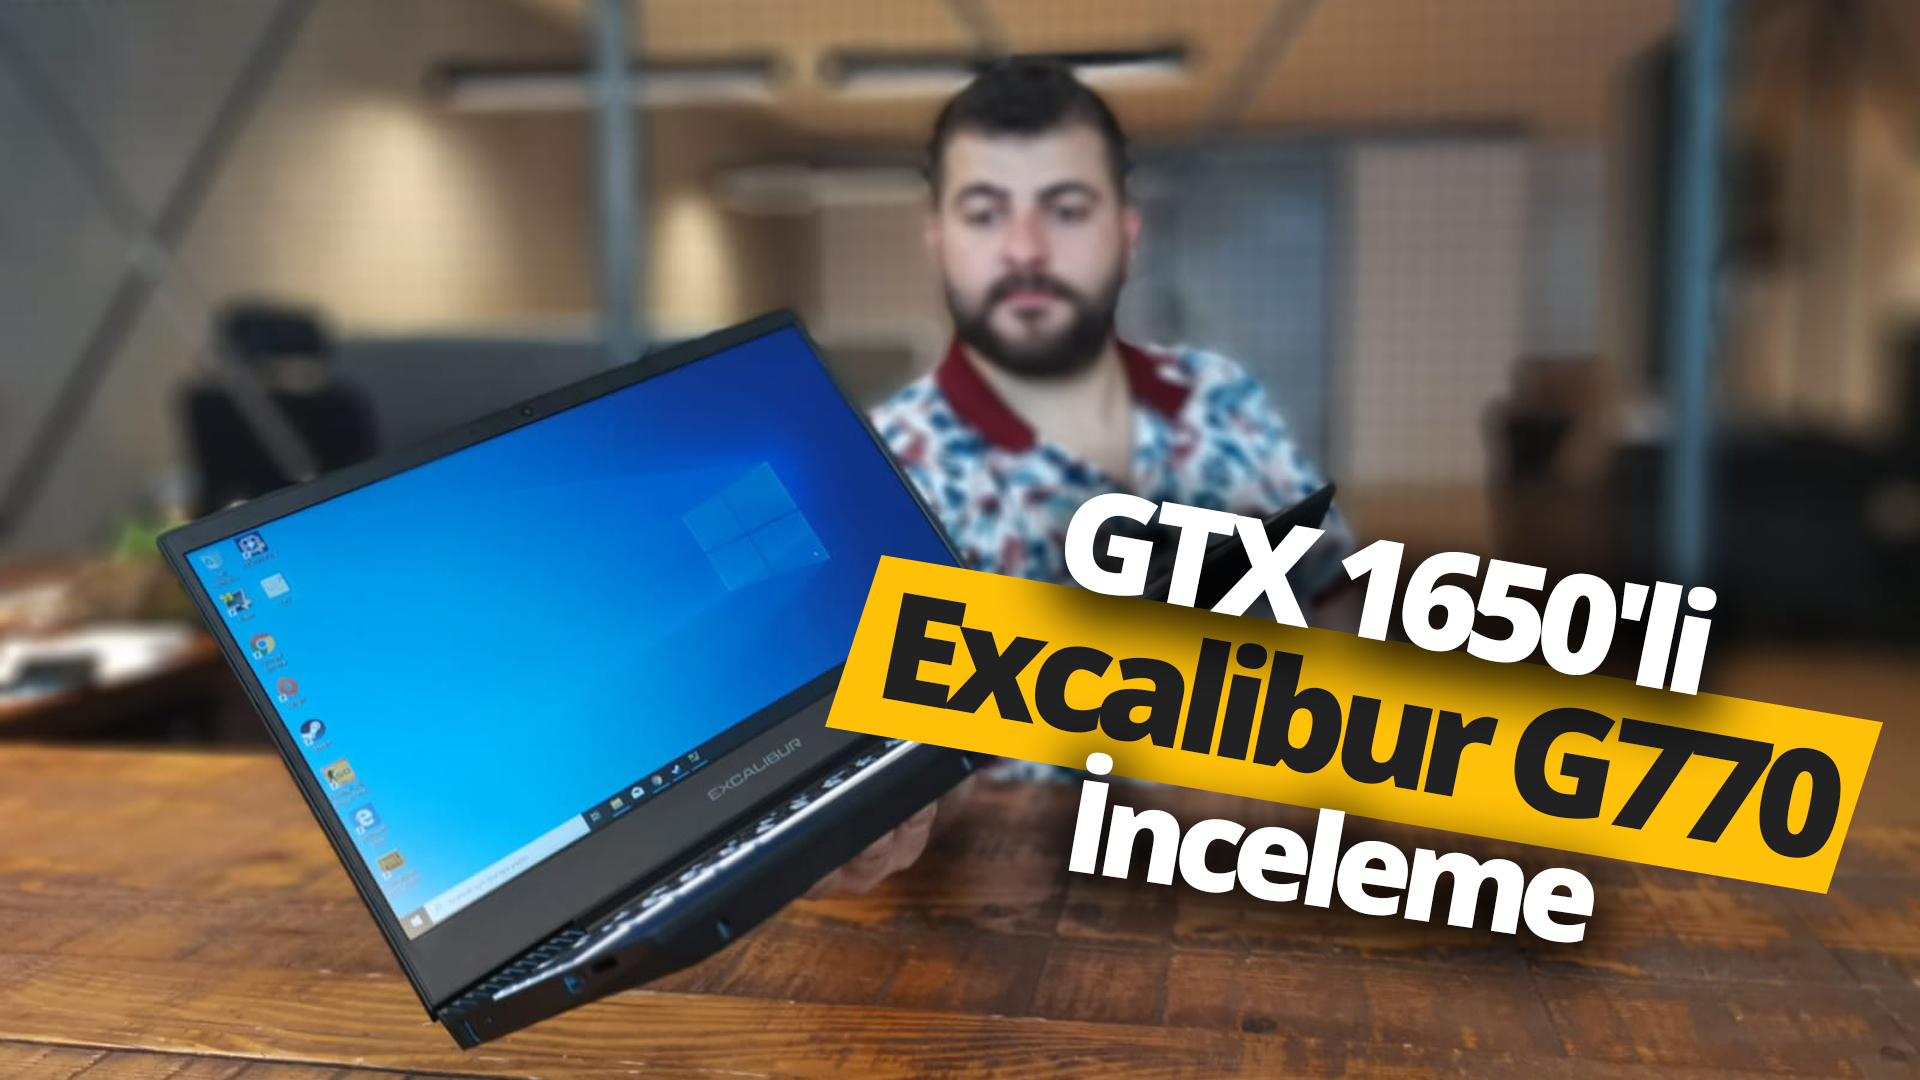 GTX 1650’li Excalibur G770 inceleme